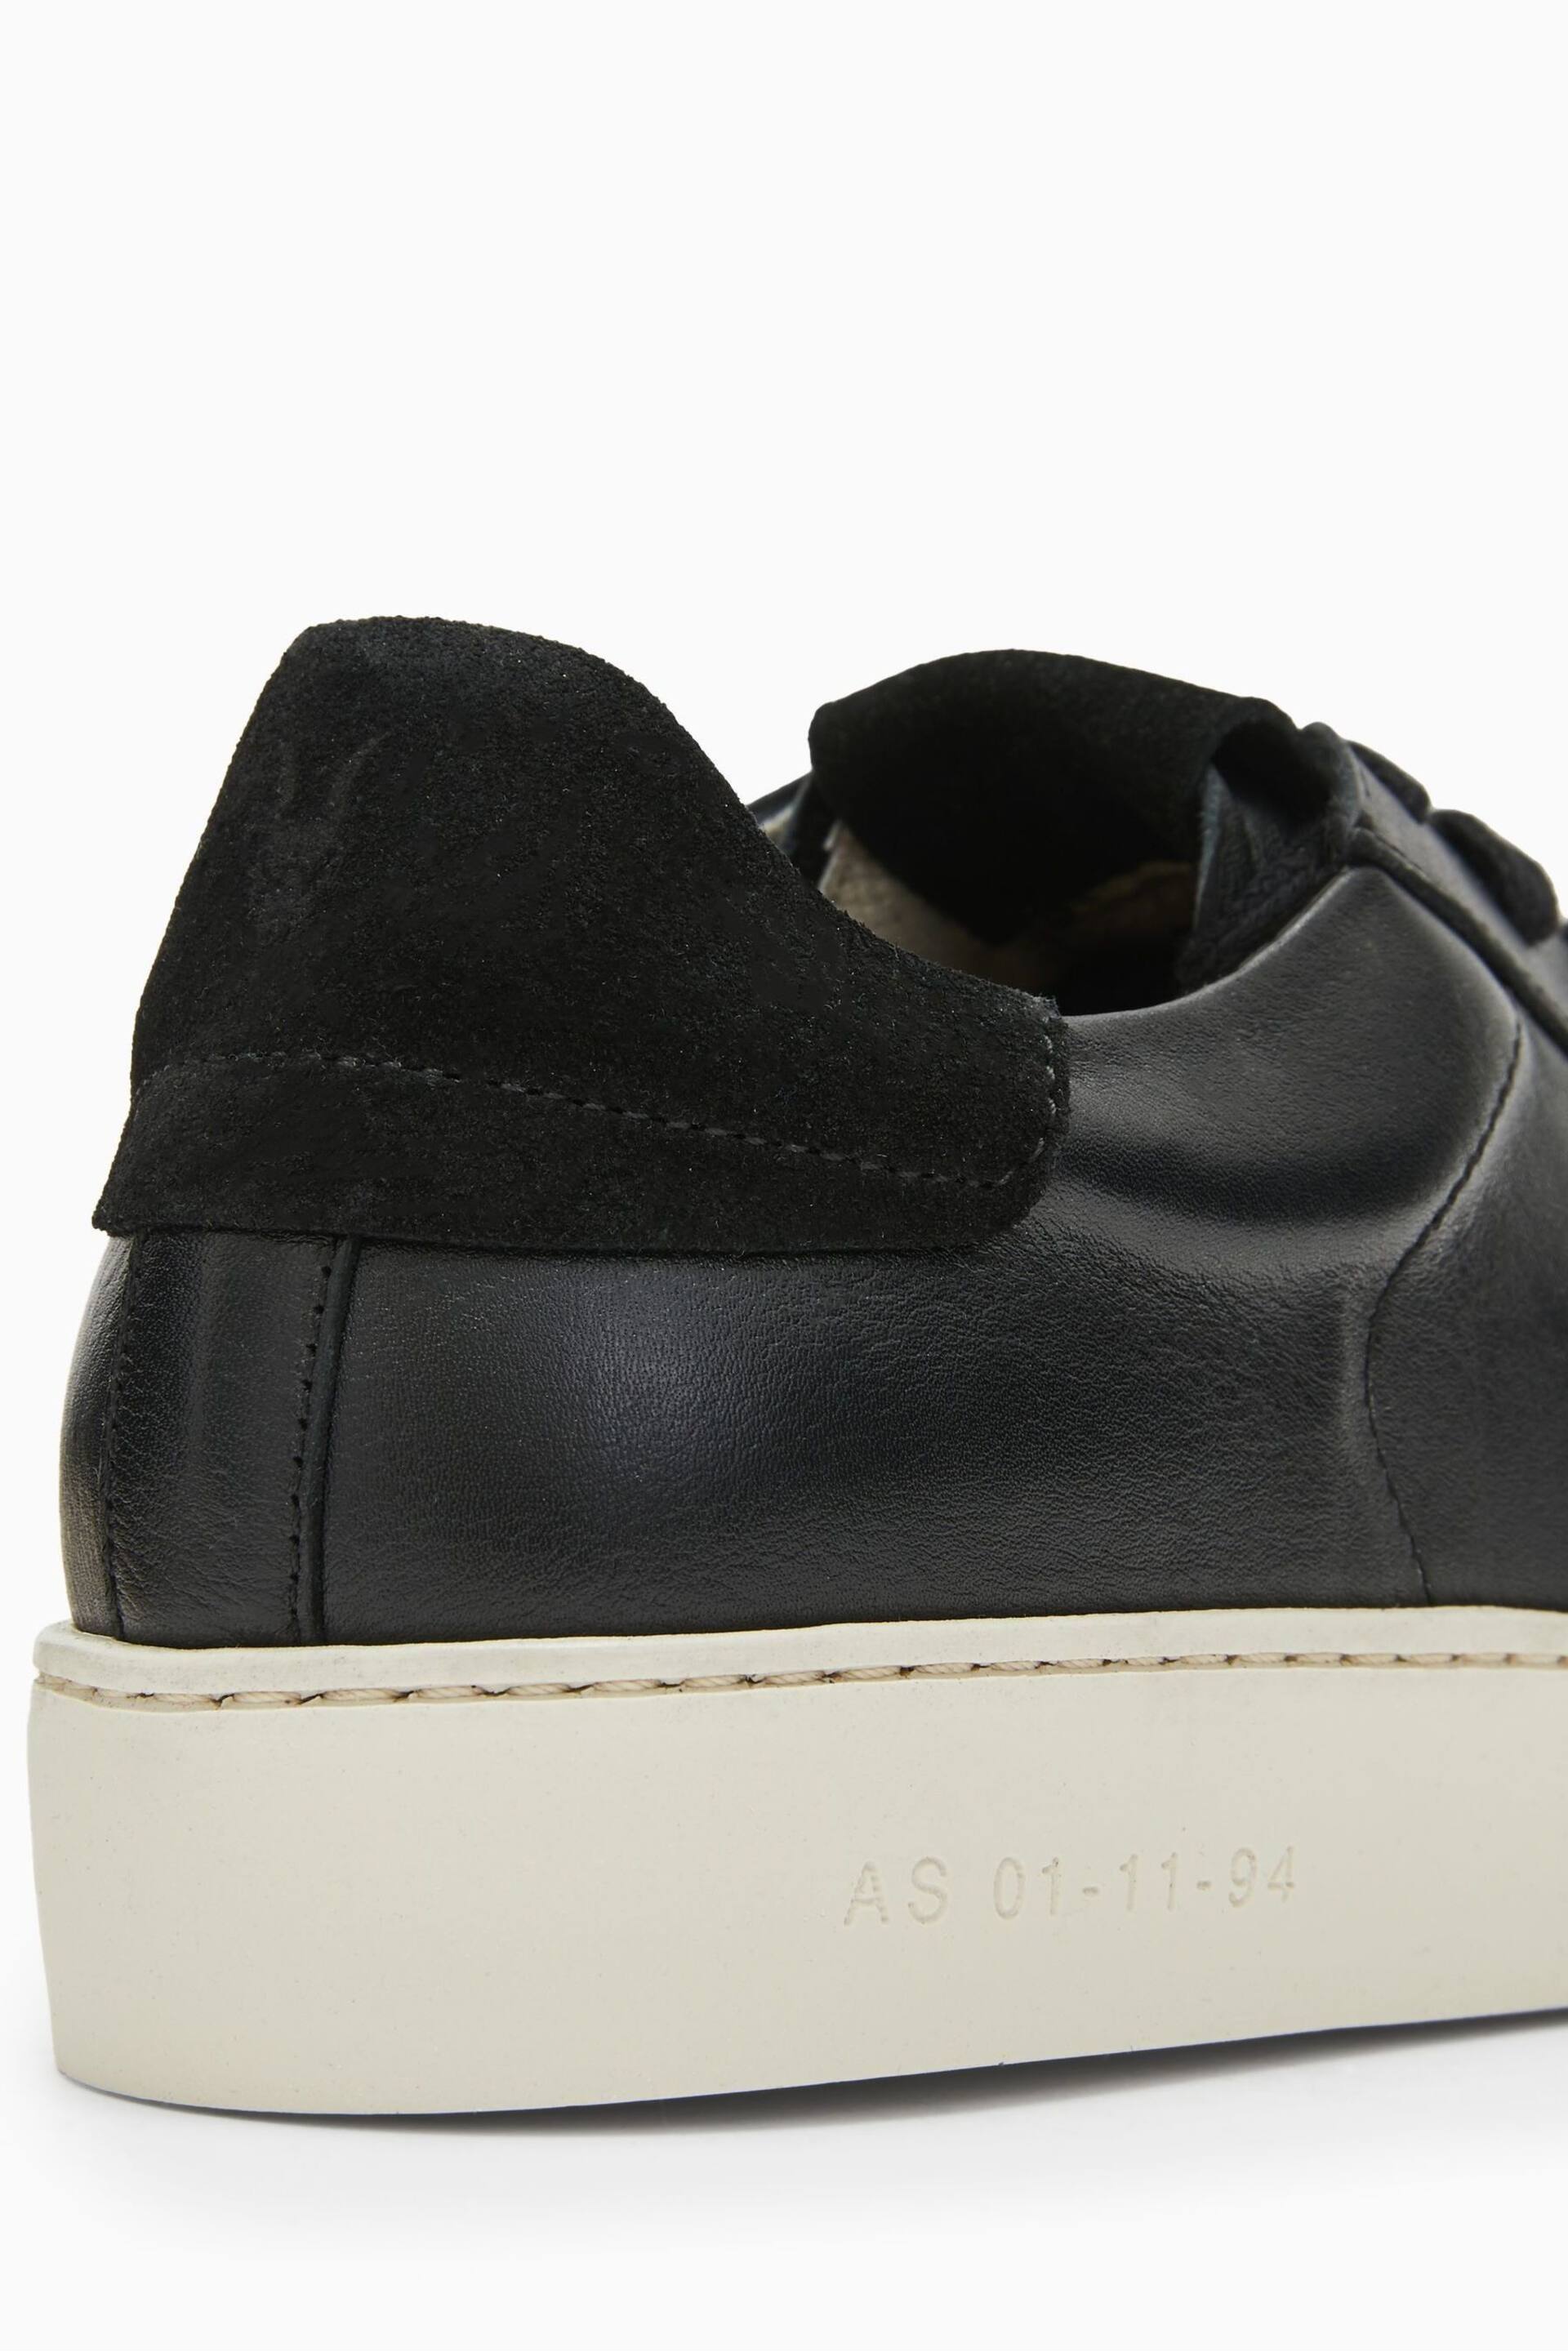 AllSaints Black Shana Sneakers - Image 6 of 7